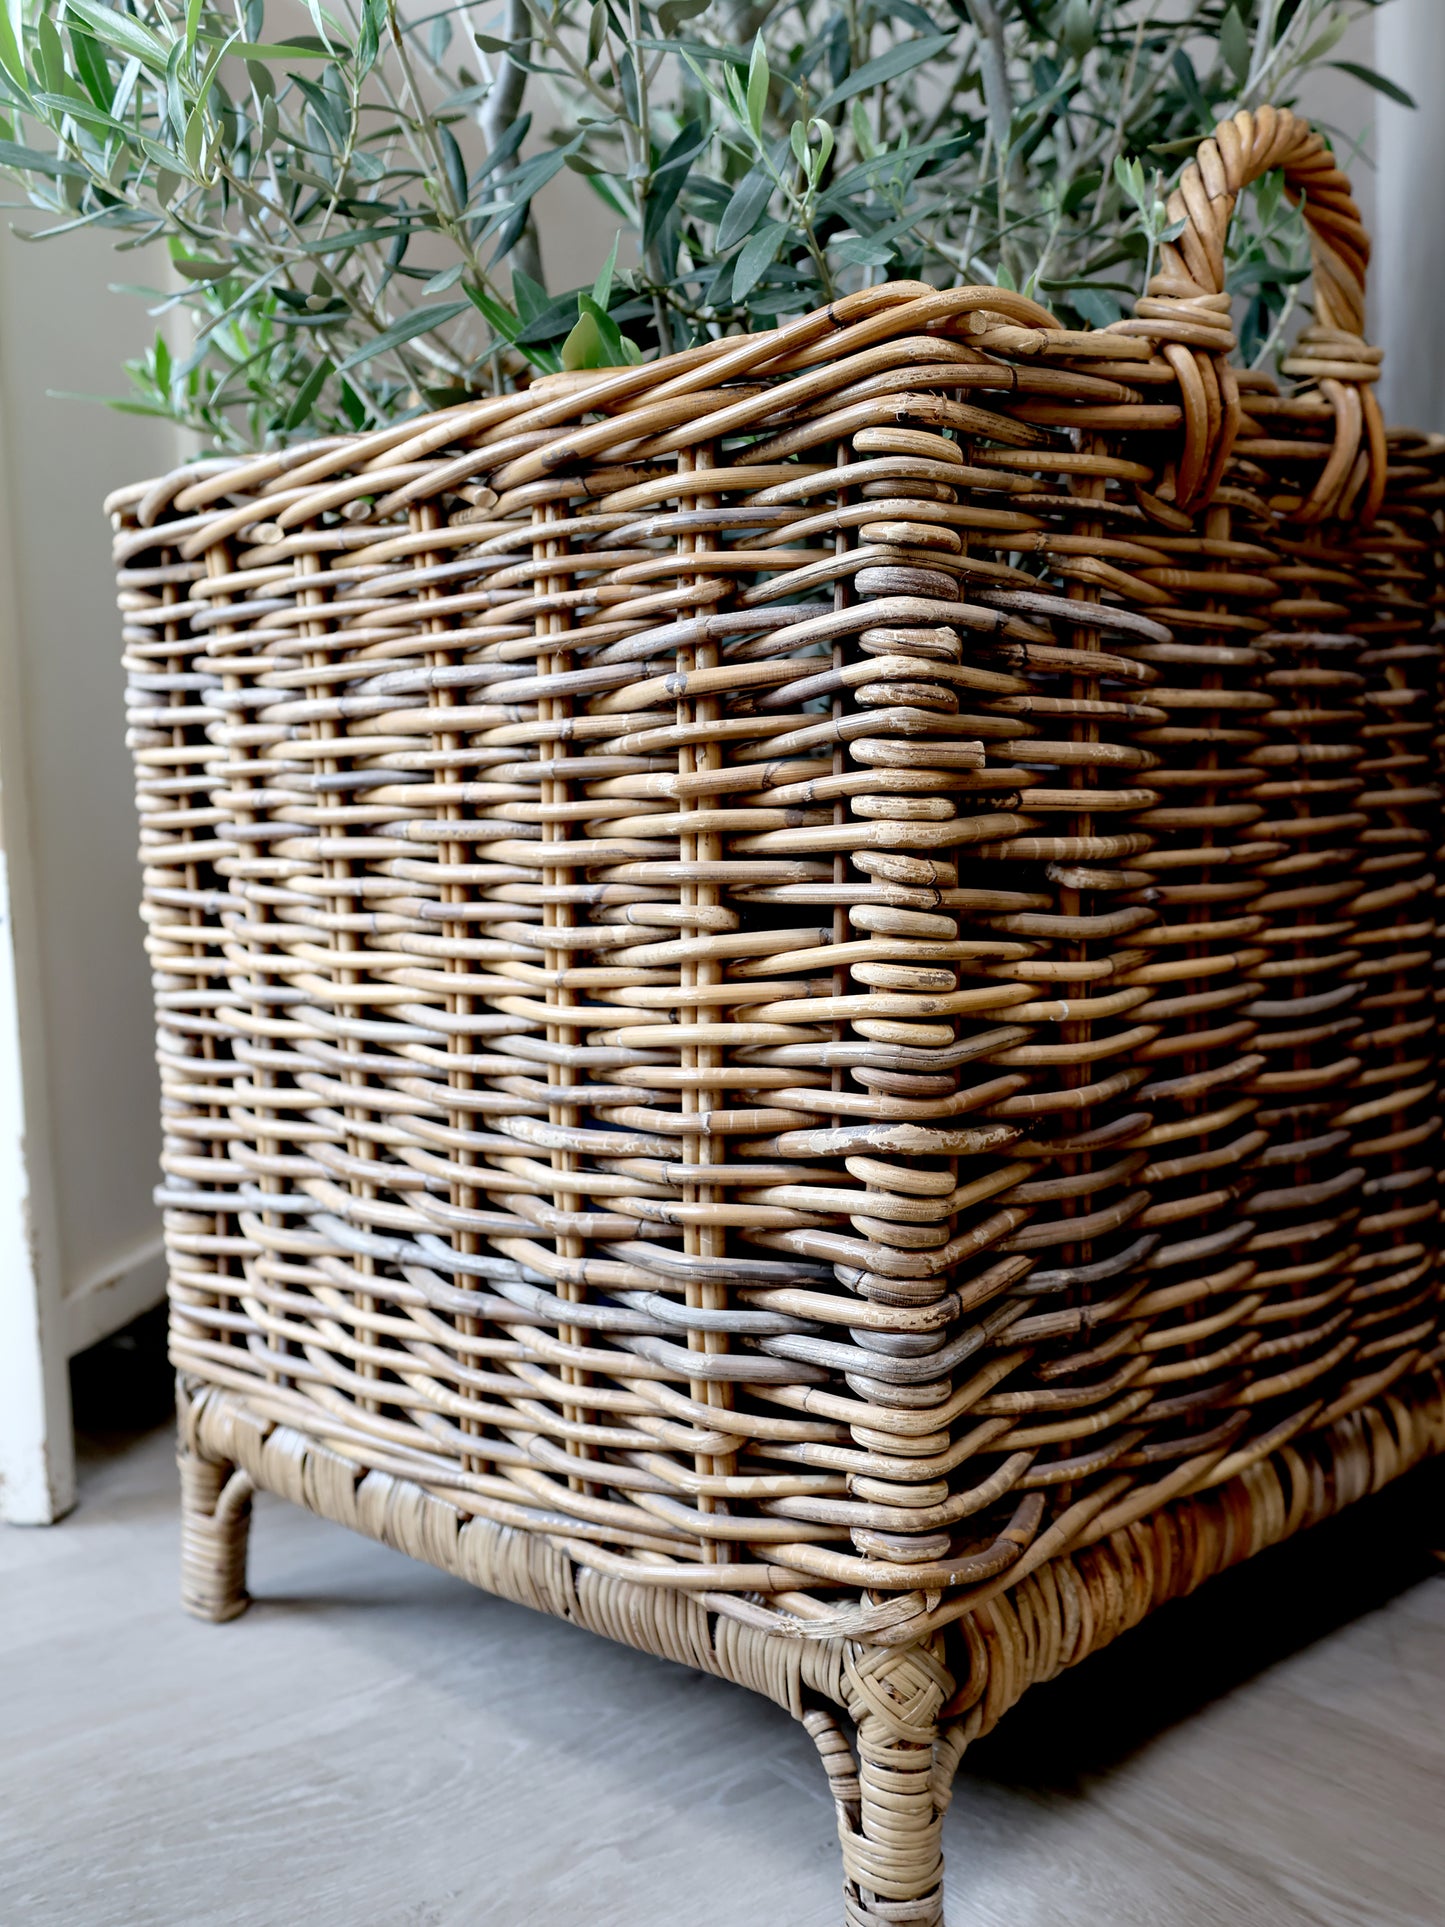 Old French Basket set of 2